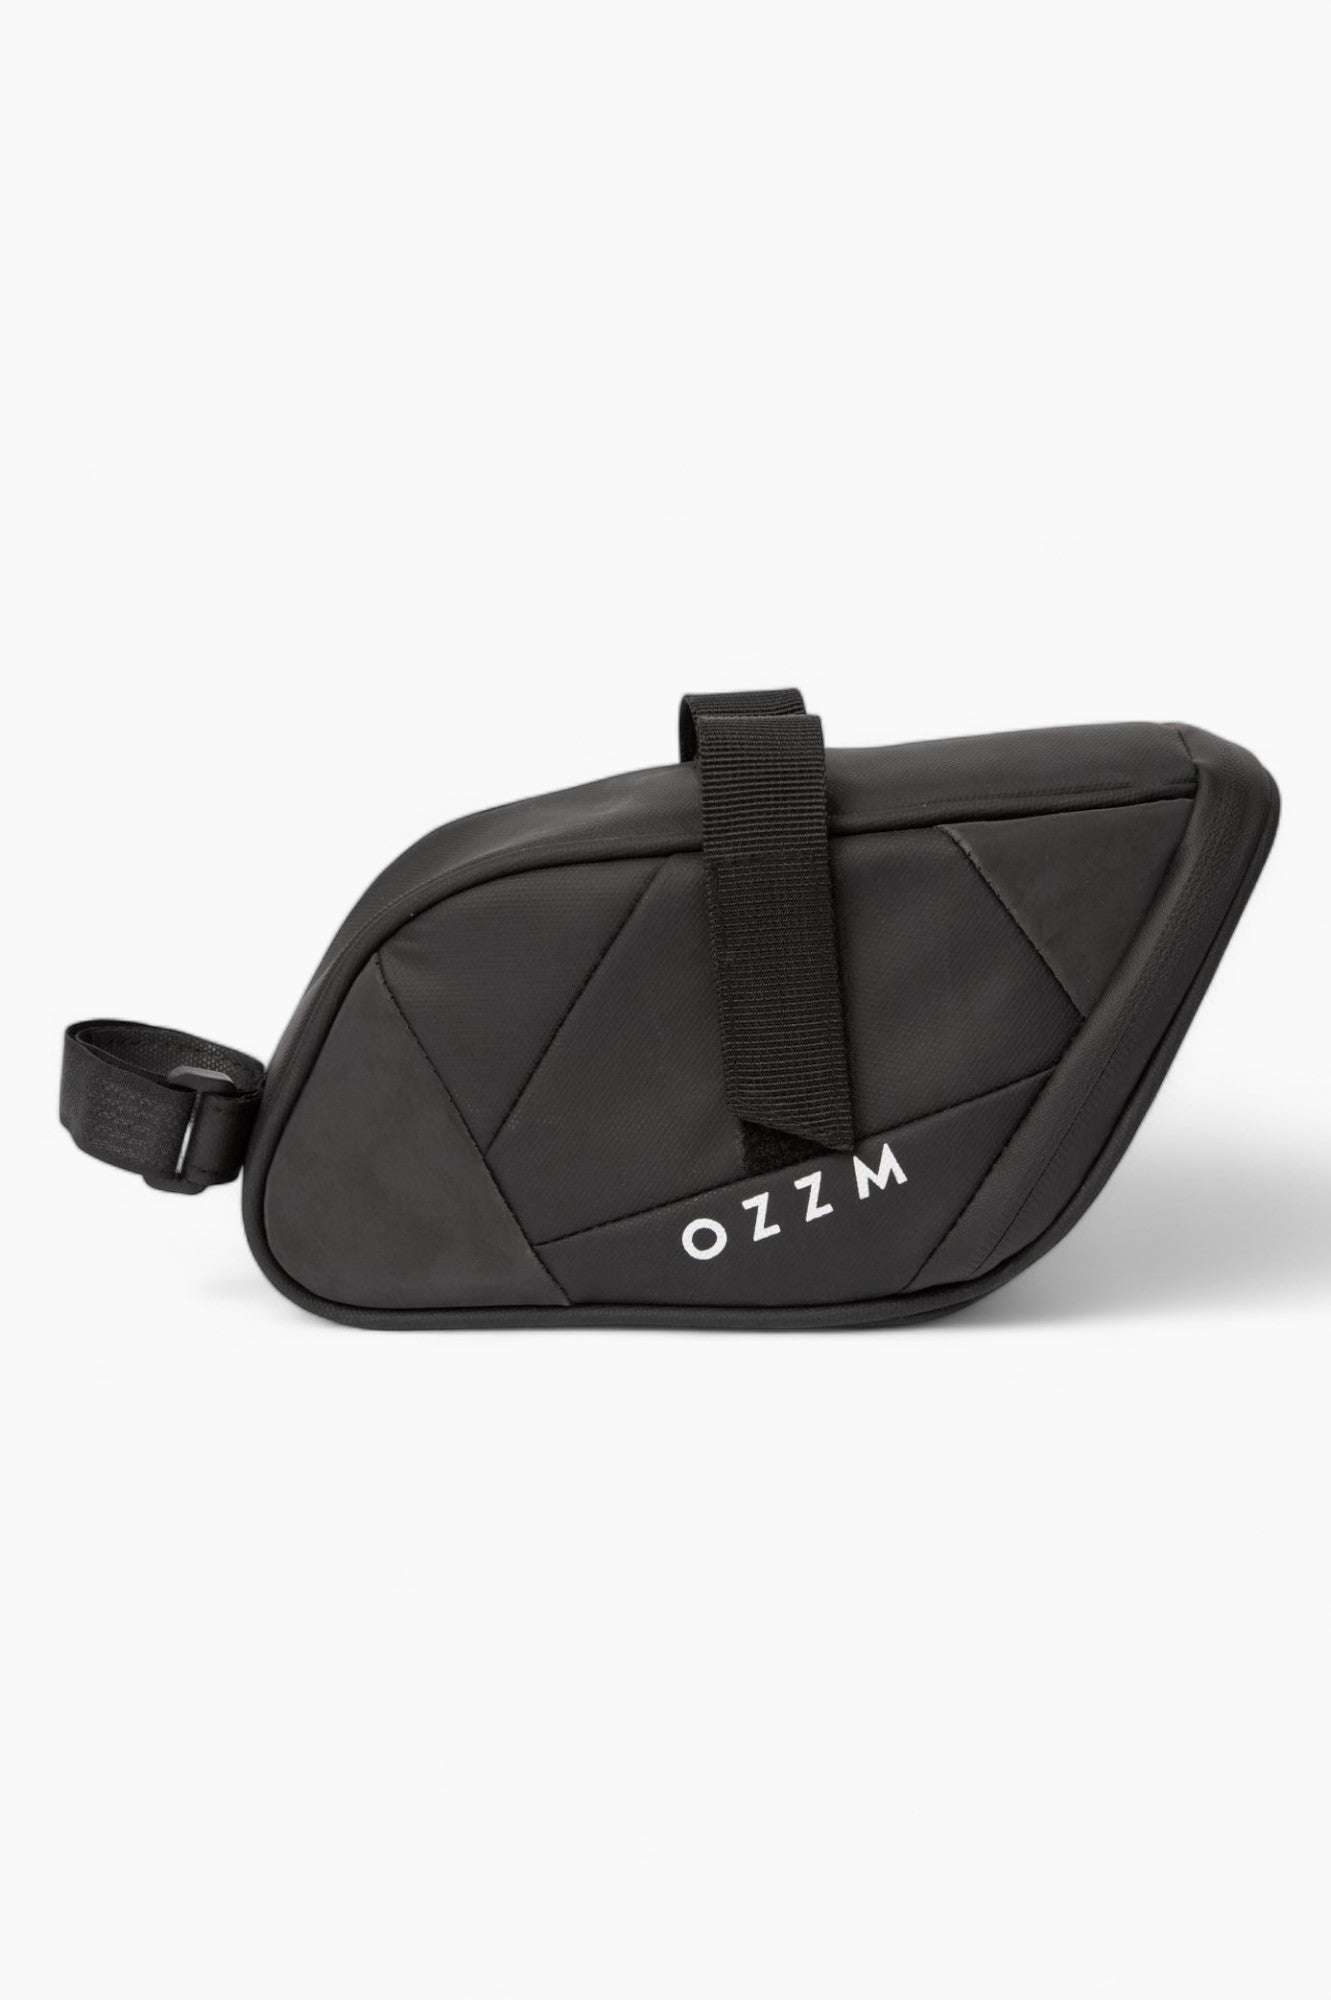 OZZM Saddle Bag